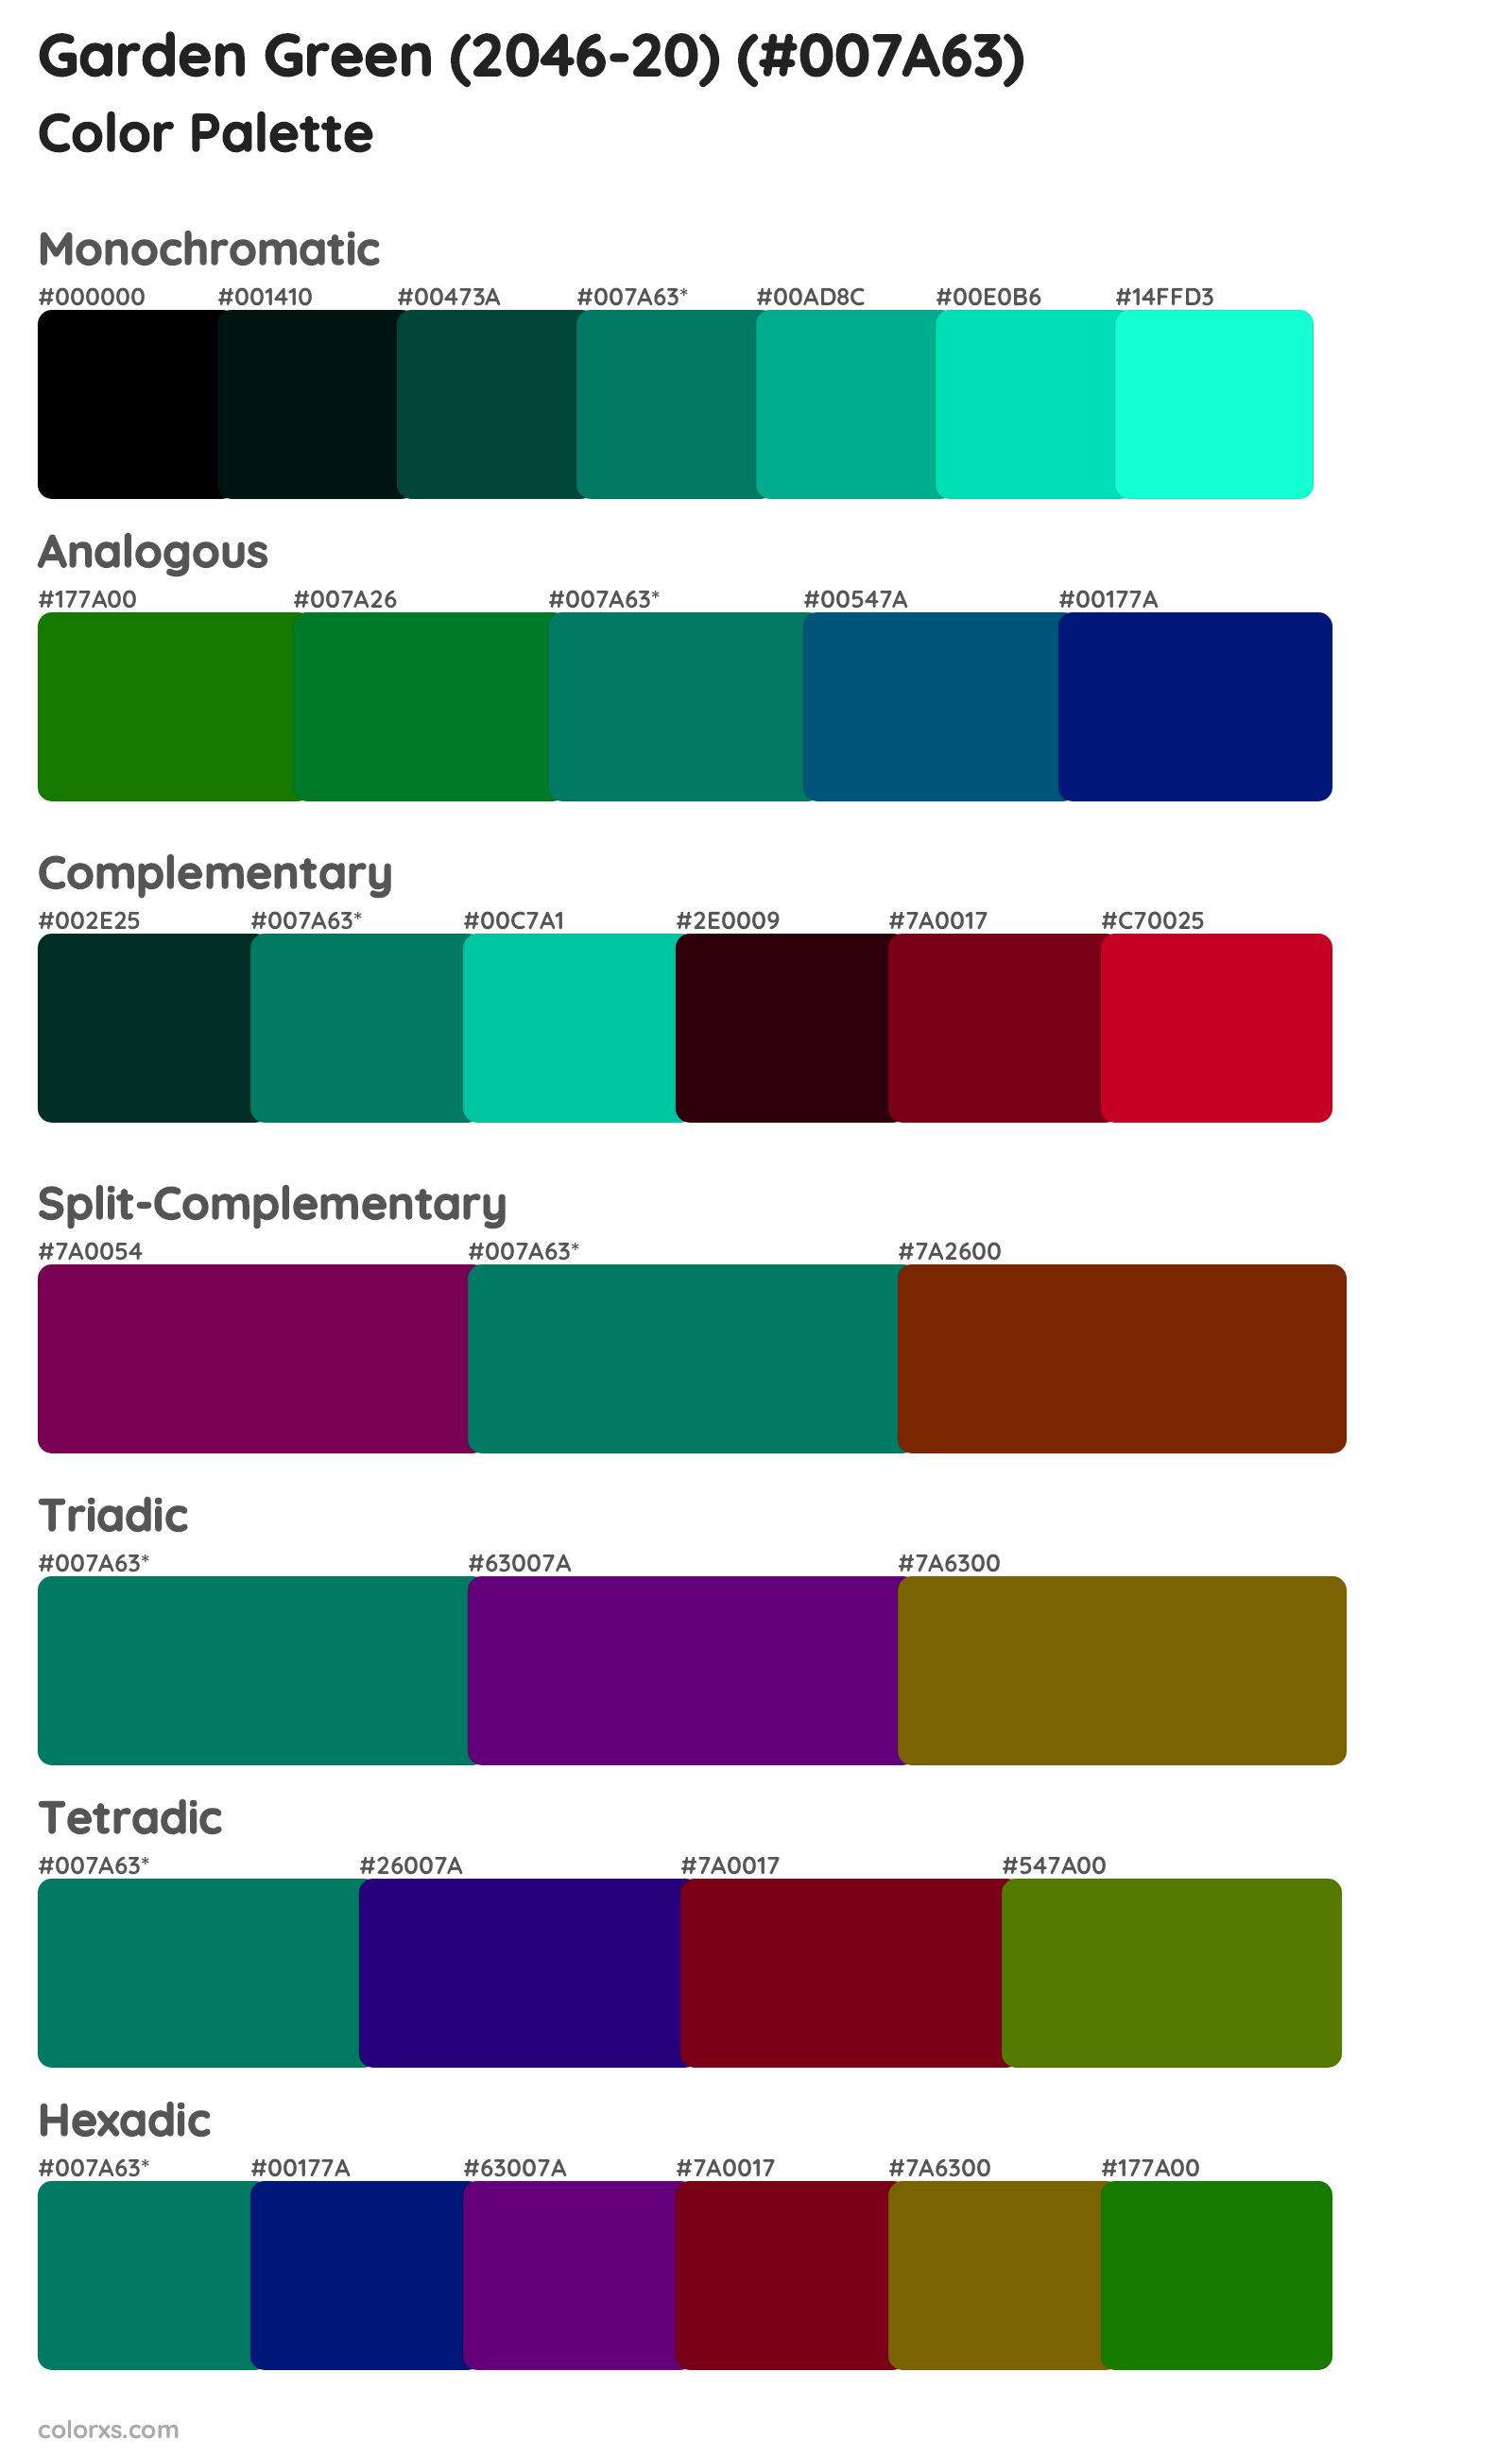 Garden Green (2046-20) Color Scheme Palettes